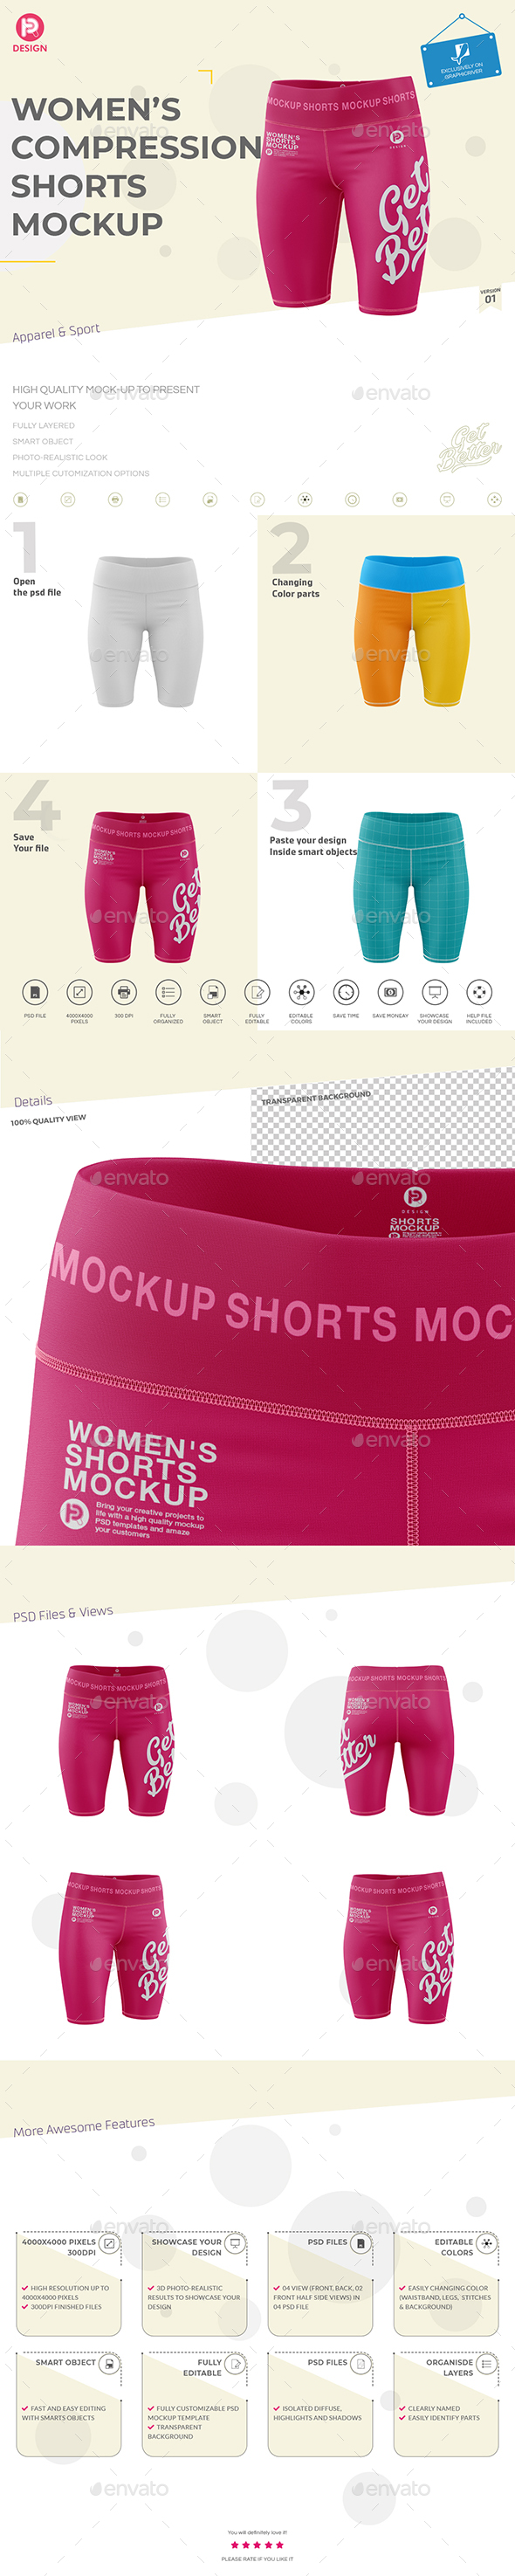 Women’s Compression Shorts Mockup V1